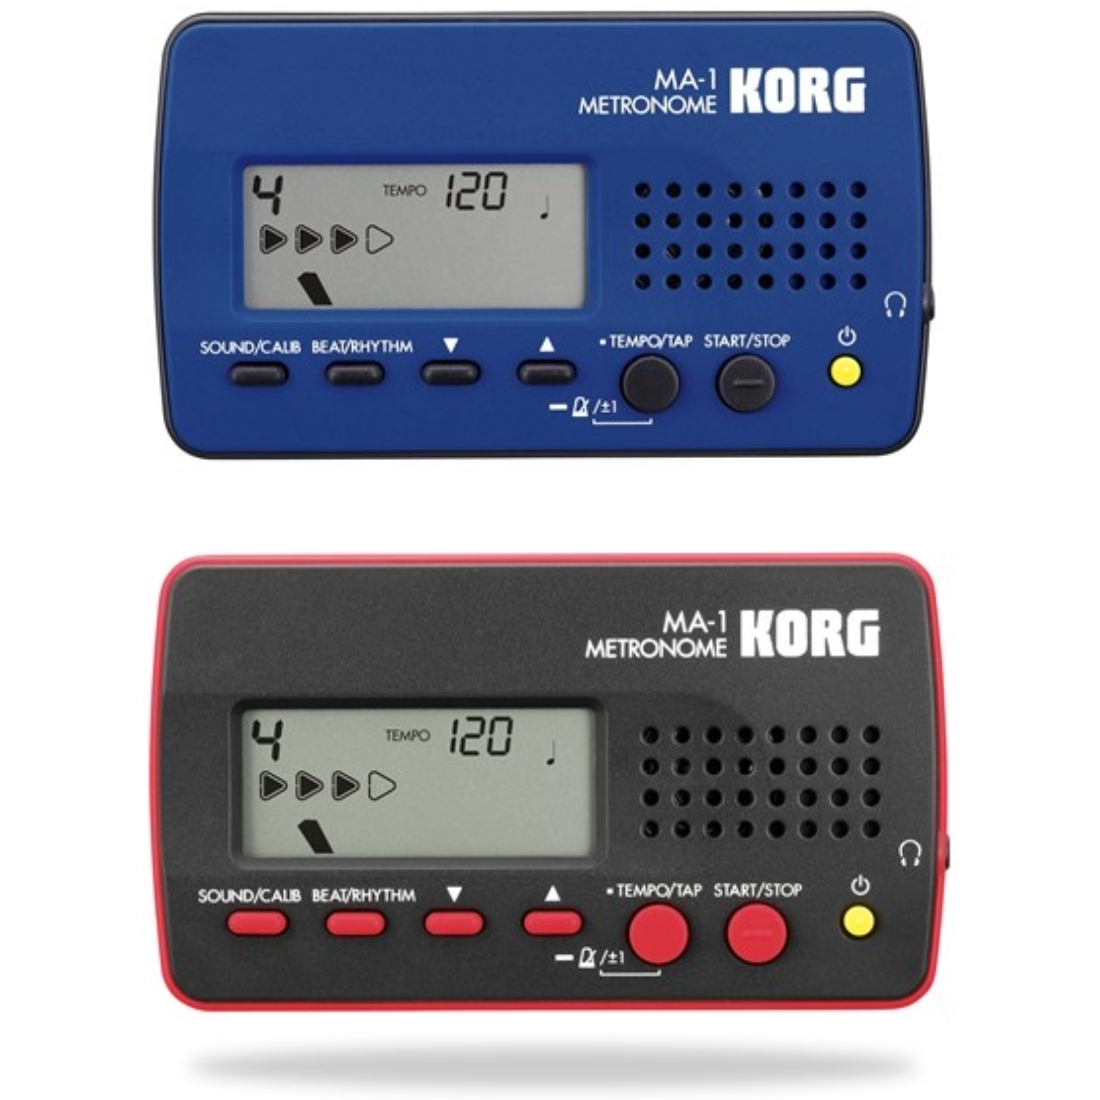 Blue rectangular KORG Metronome and black and red KORG metronome